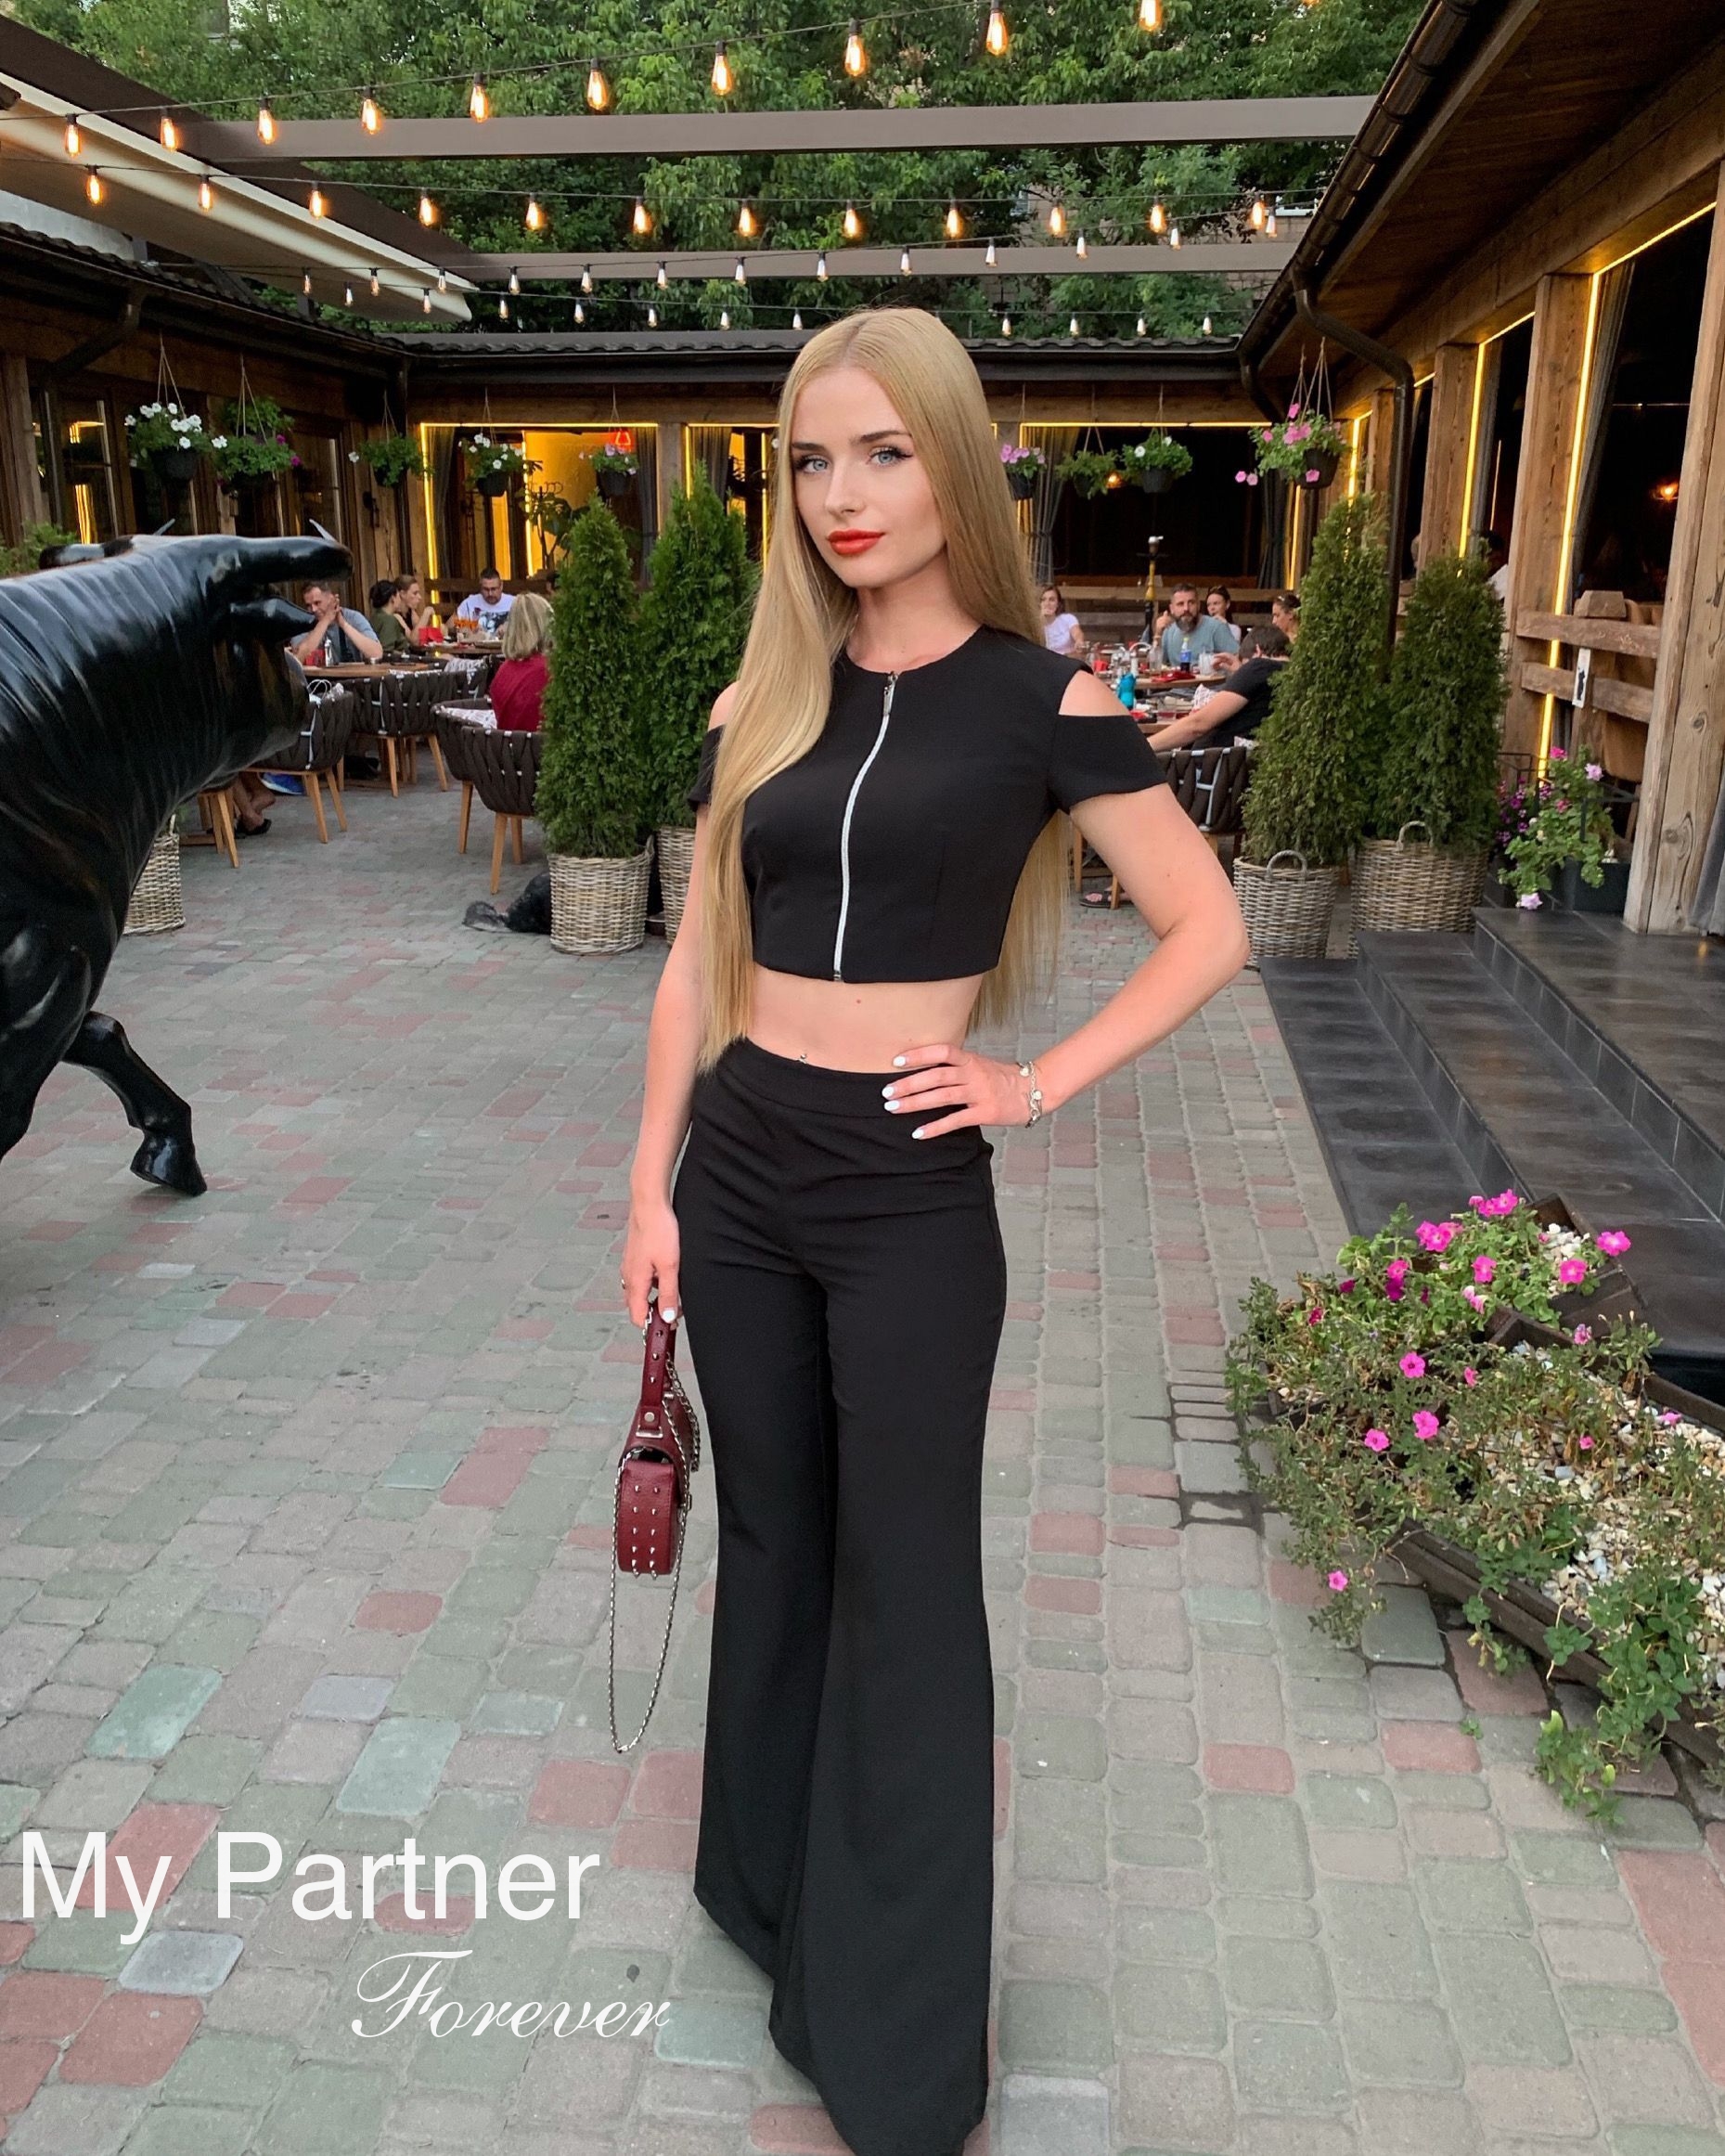 Dating Service to Meet Marina from Poltava, Ukraine